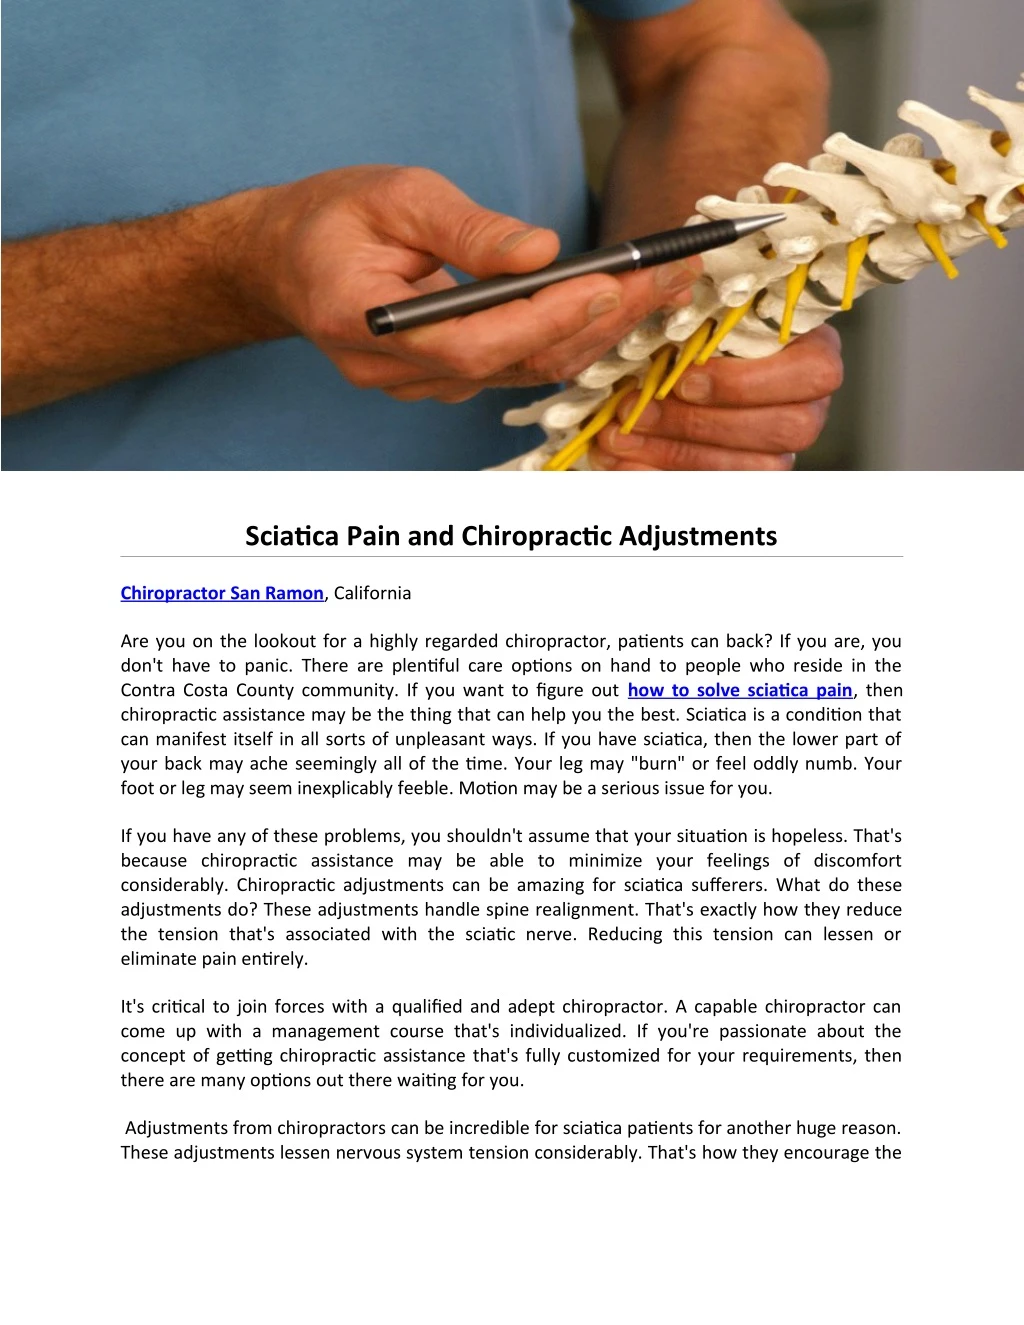 sciatica pain and chiropractic adjustments